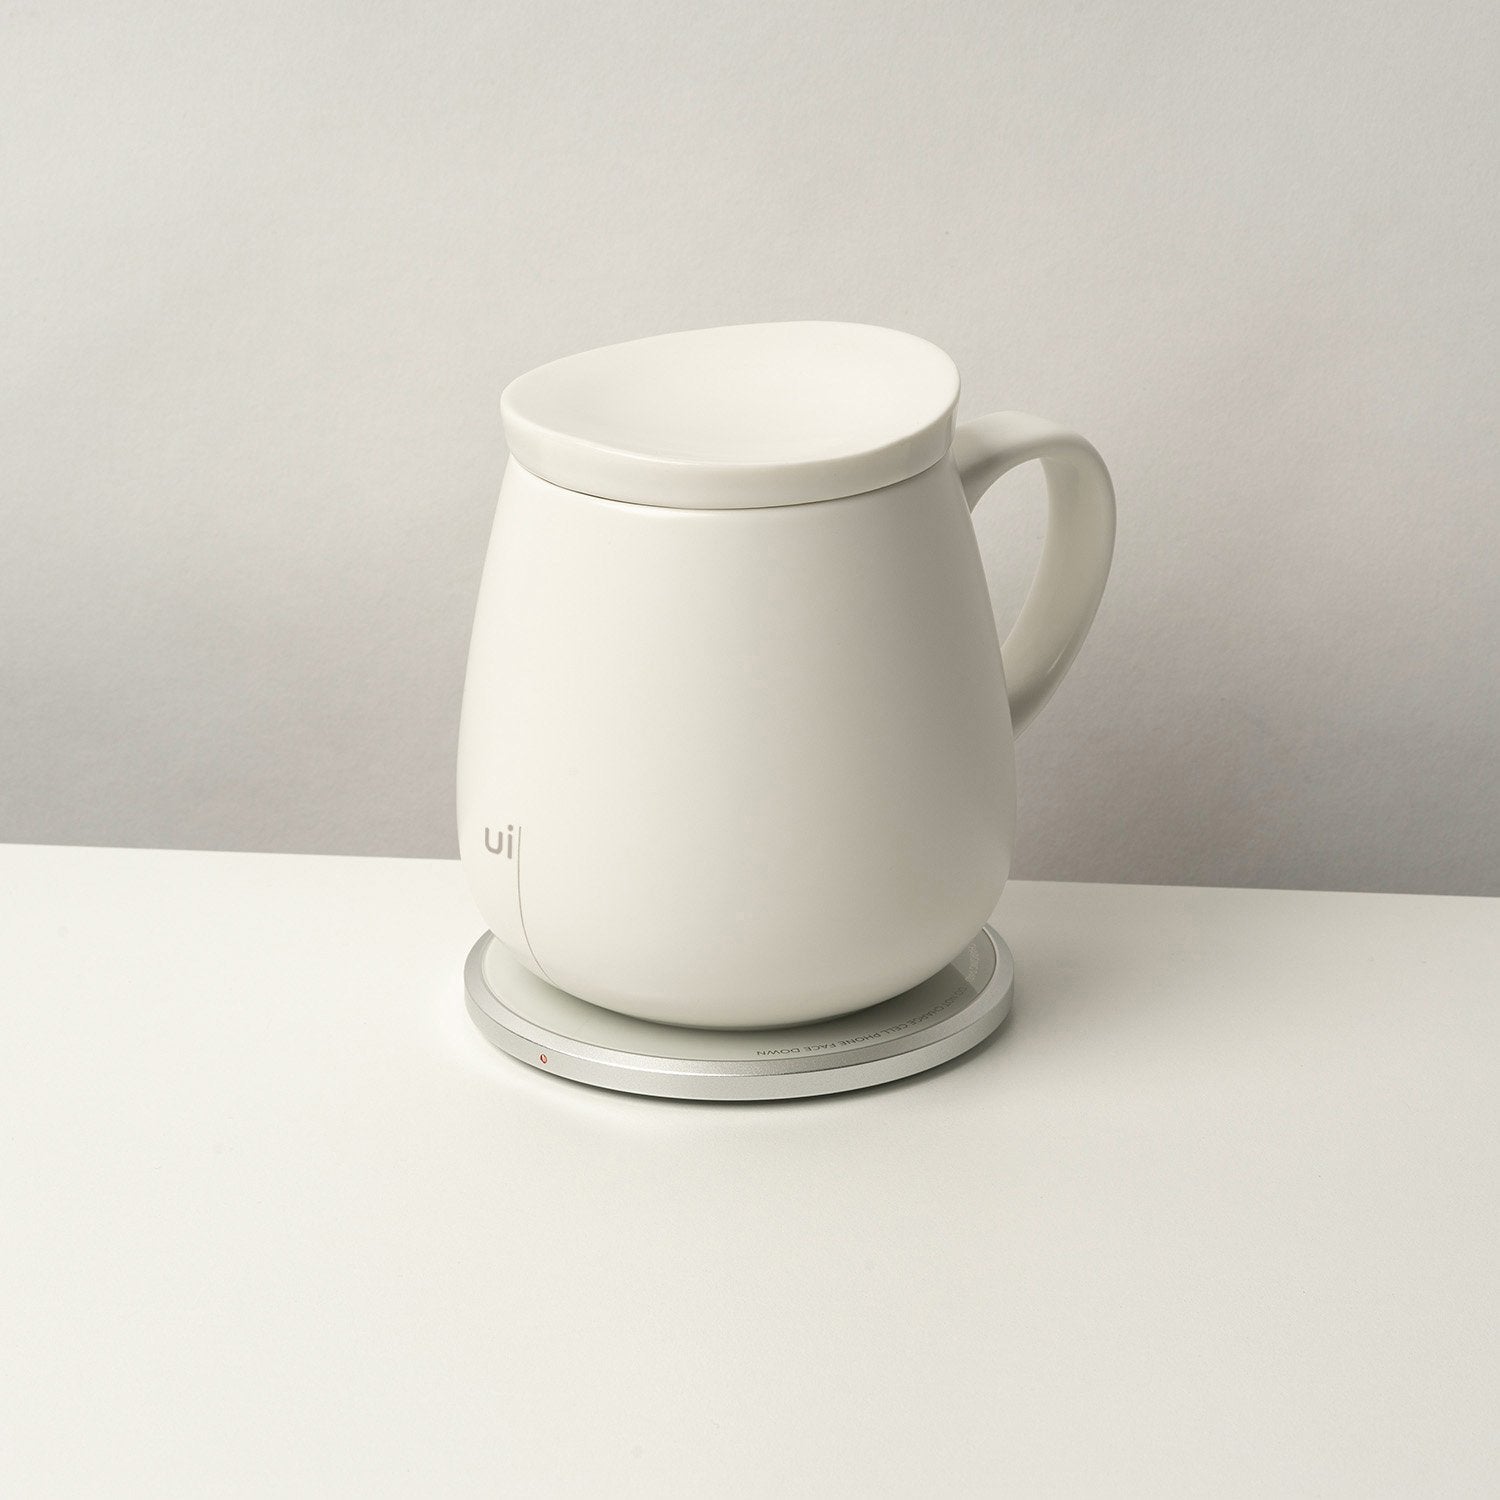 Large white mug with lid on heating pad